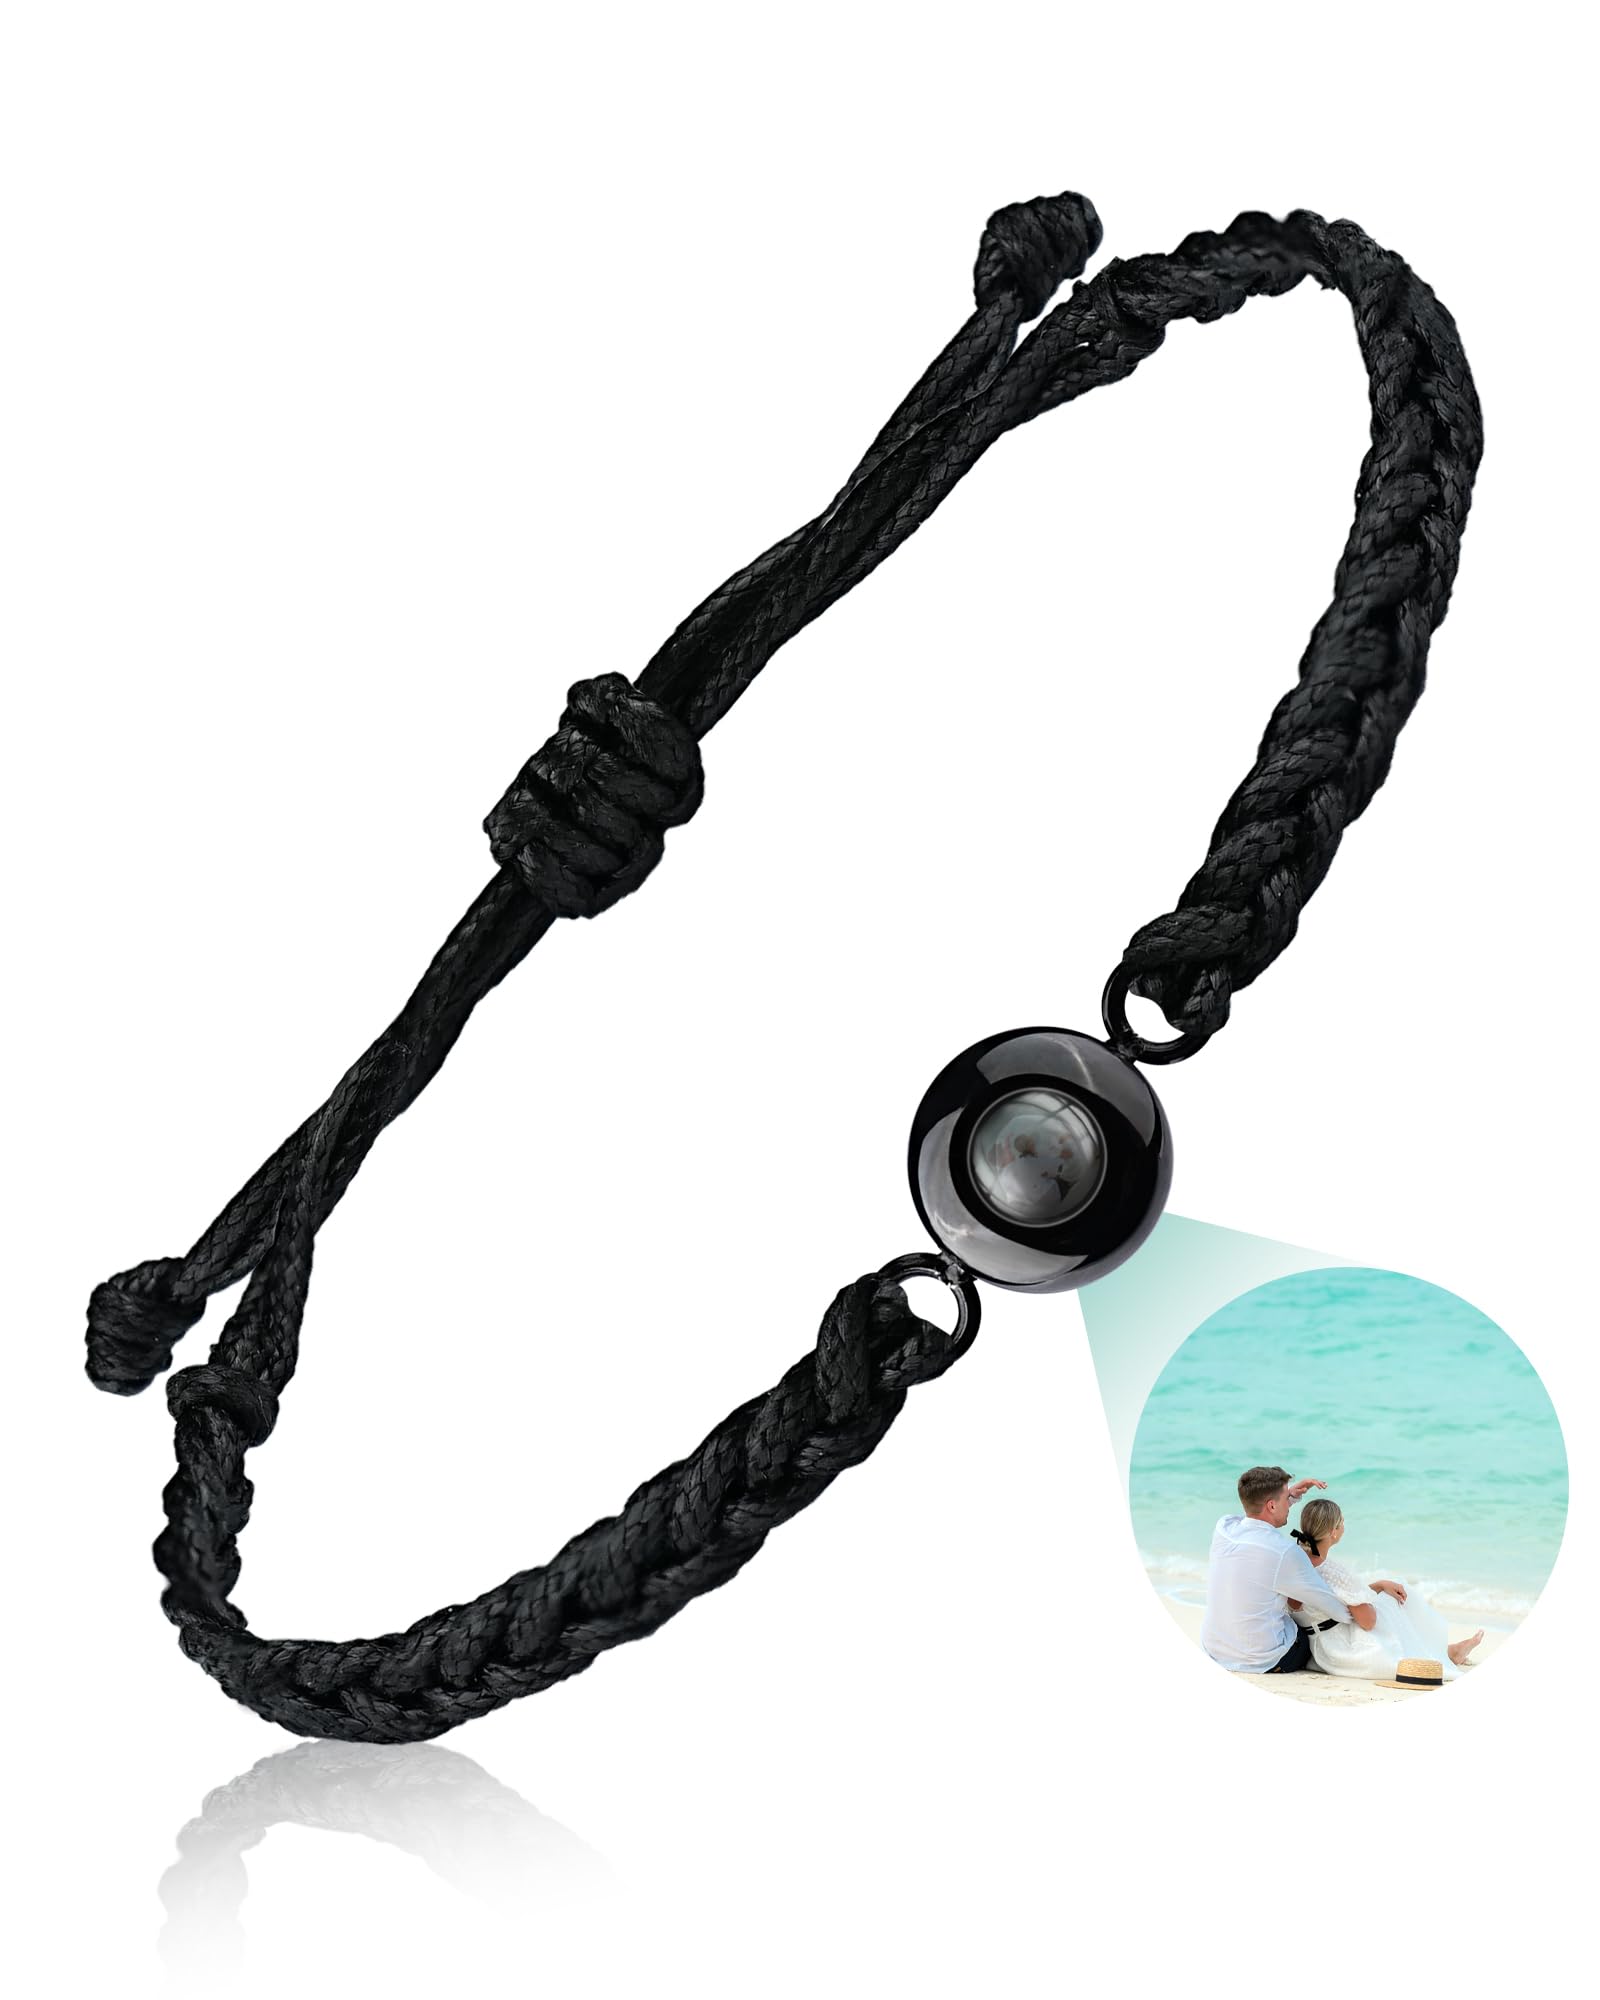 SUPHELPU Custom Bracelets with Picture inside, Customized Projection Bracelets with Photos, Picture Bracelet Personalized Photo,